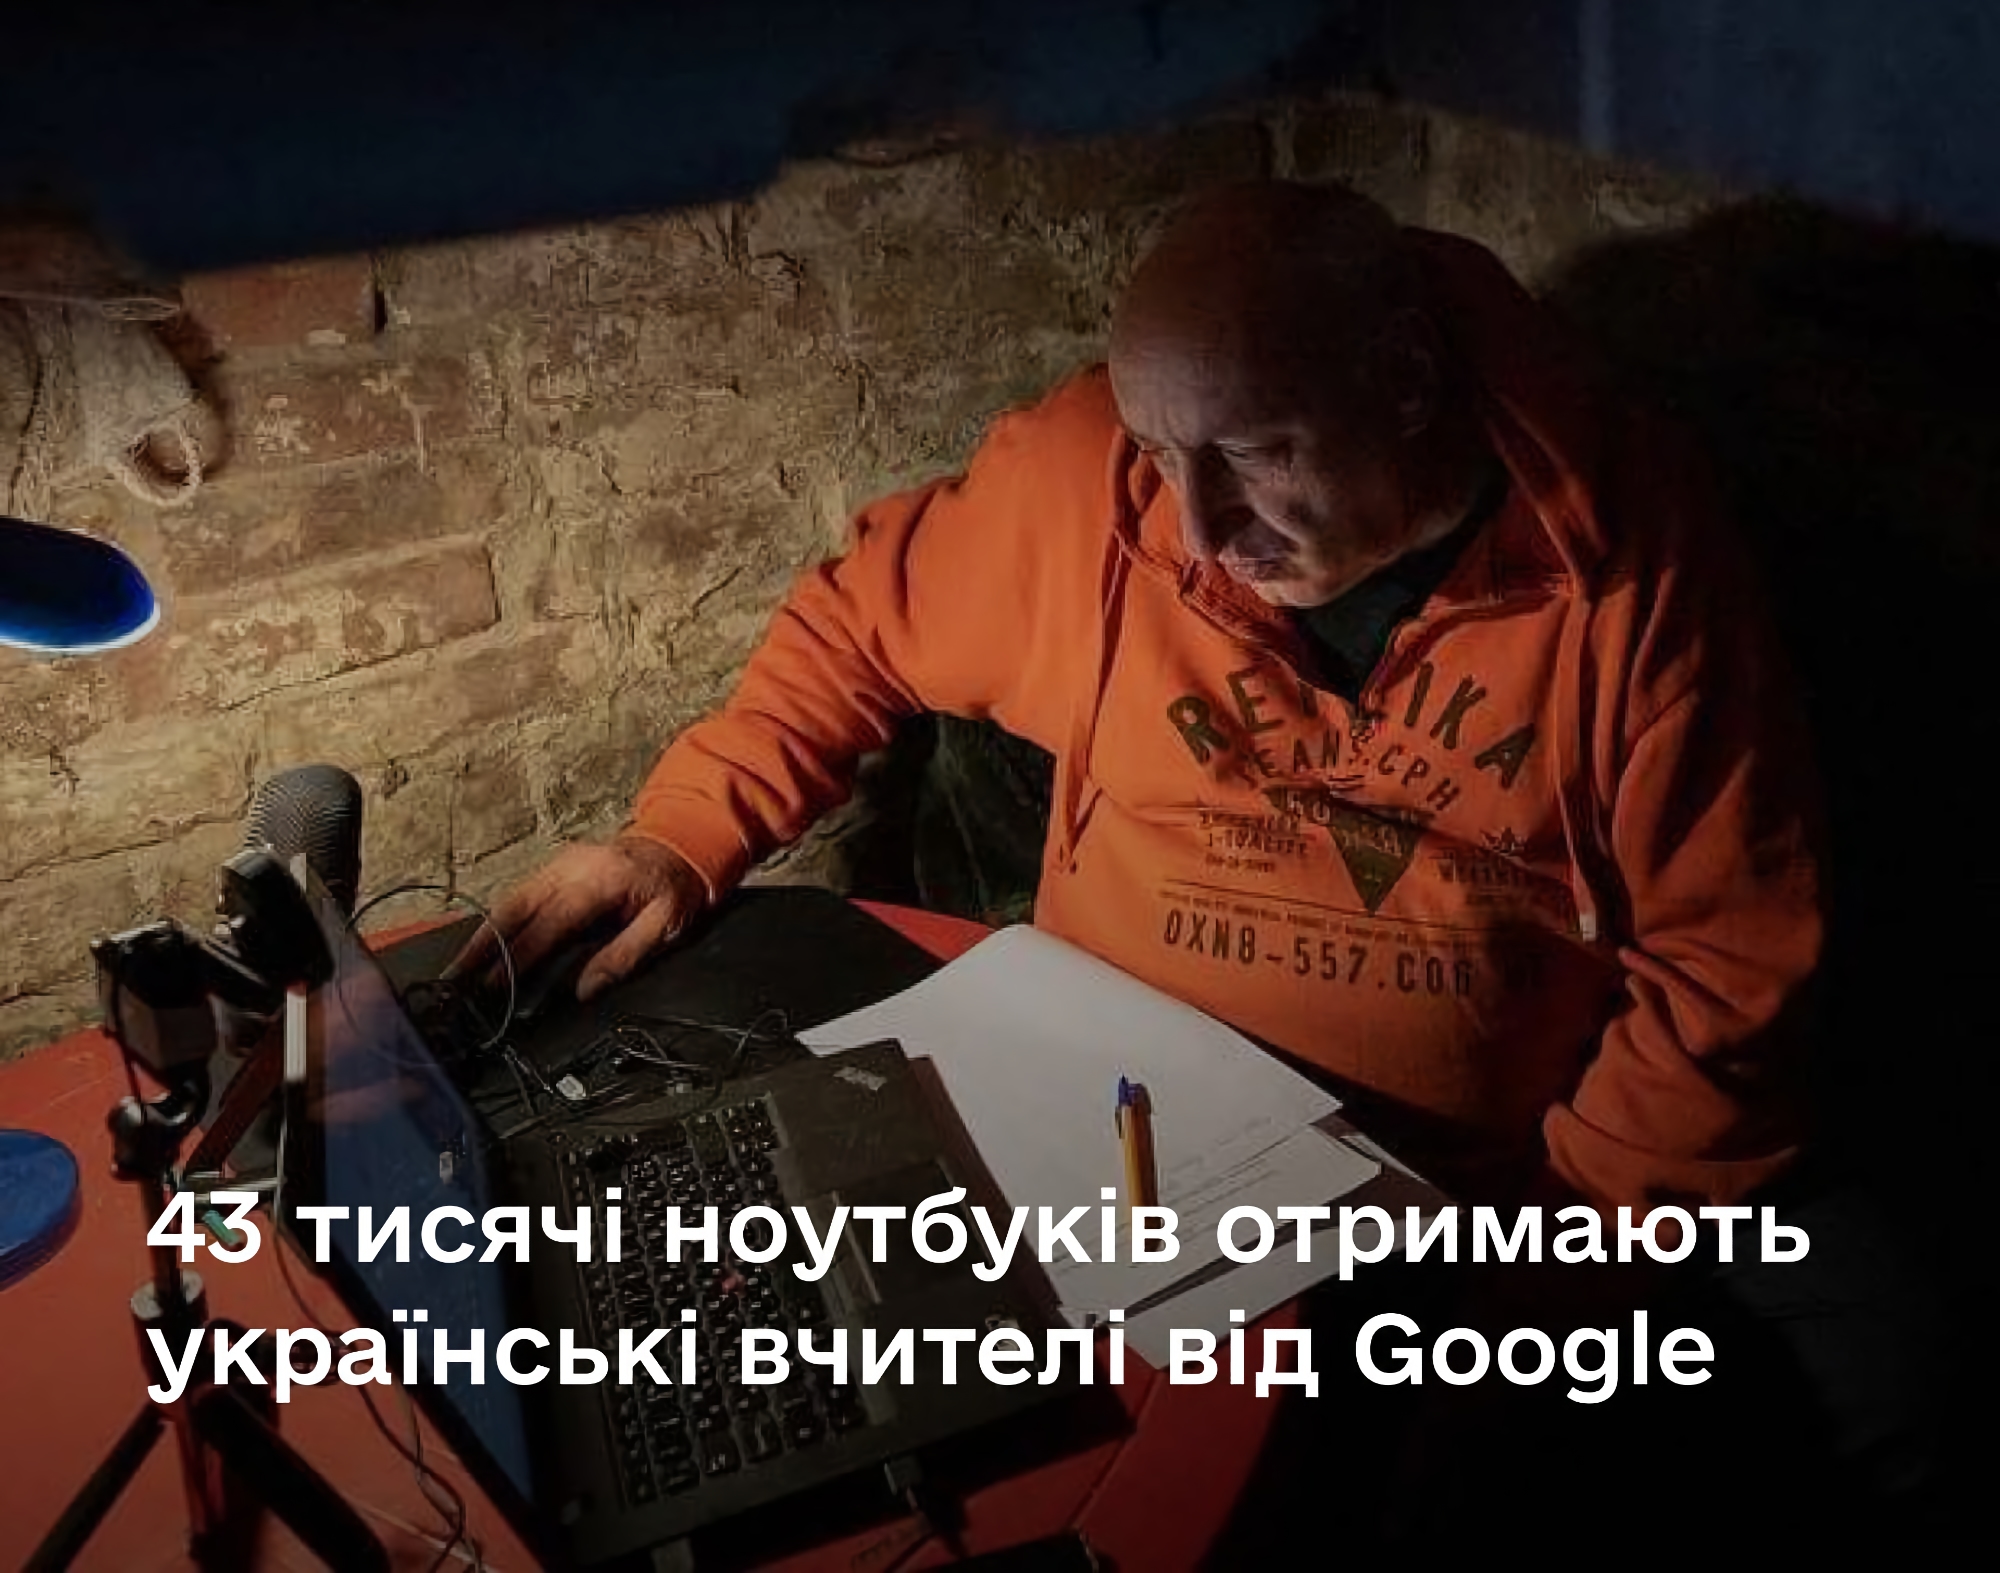 Google will give Ukrainian teachers 43,000 laptops on Chrome OS